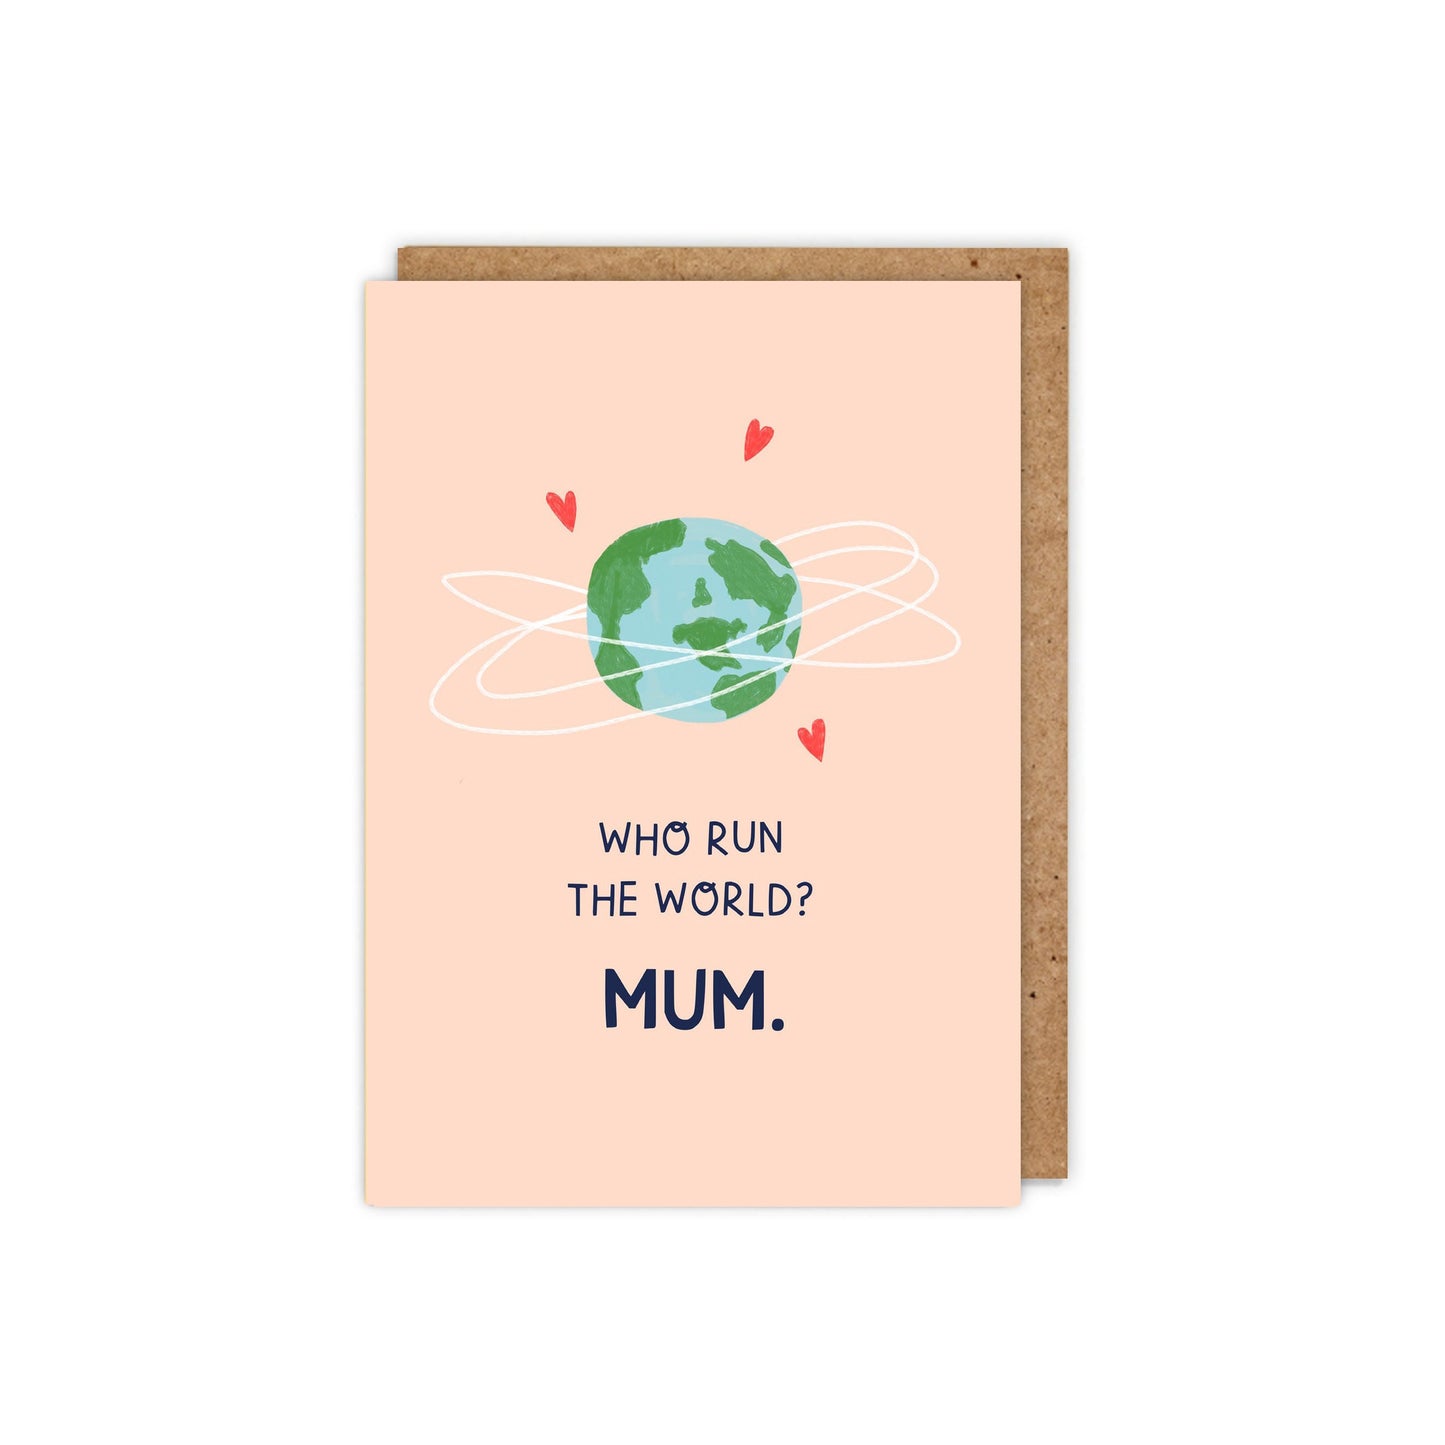 Who run the world? Mum. Card.